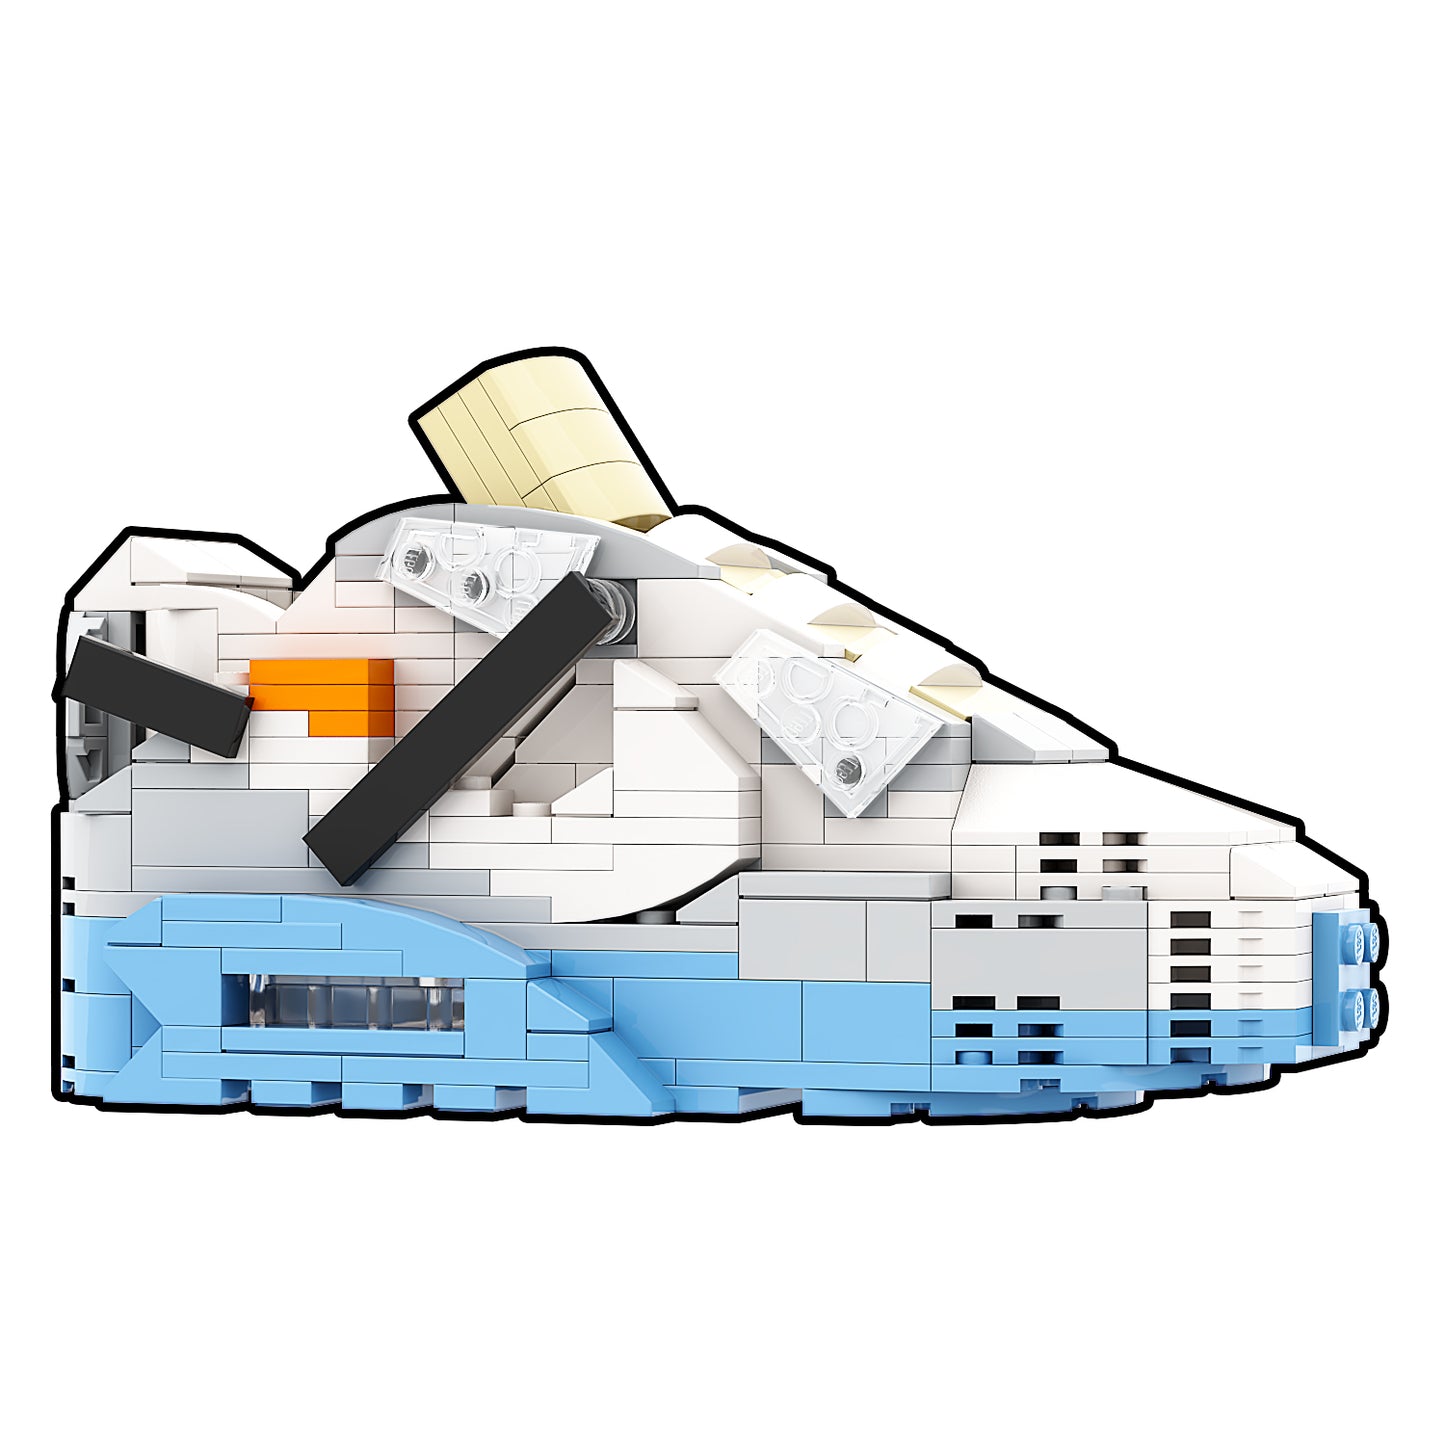 REGULAR Air Max 90 "Off-White White" Sneaker Bricks with Mini Figure